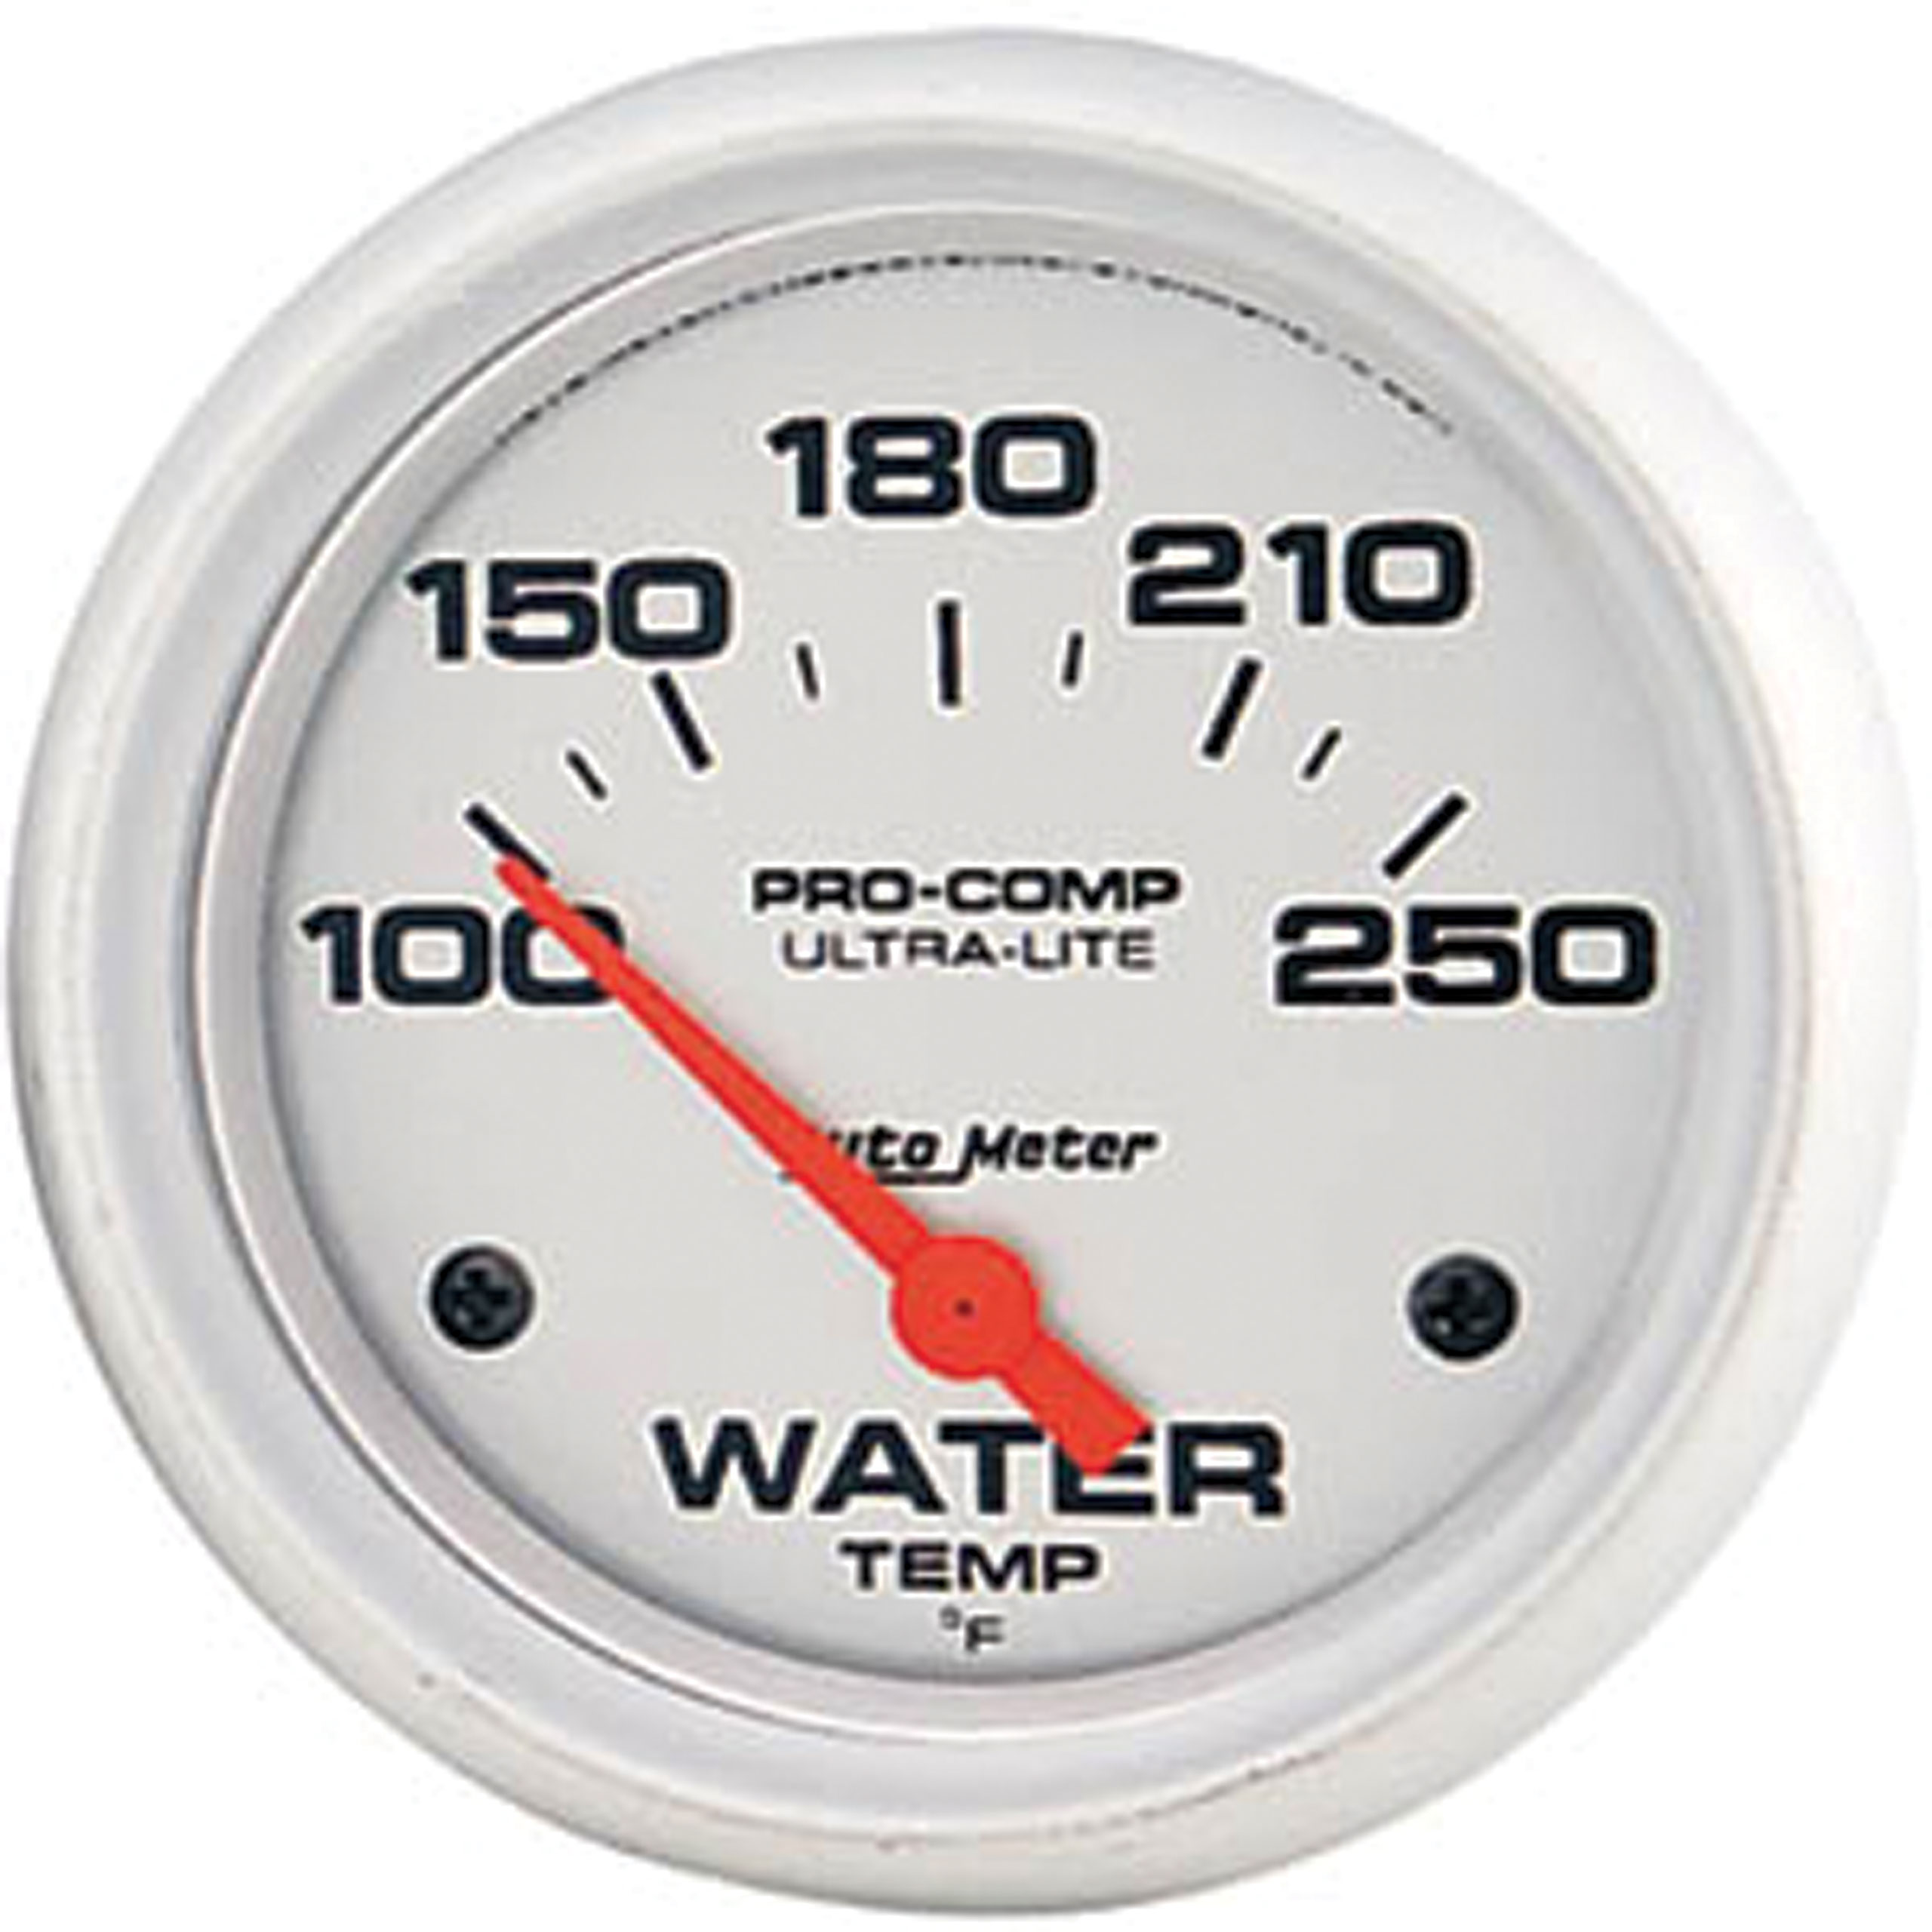 Auto Meter 4337 Ultra-Lite Electric Water Temperature Gauge, Silver